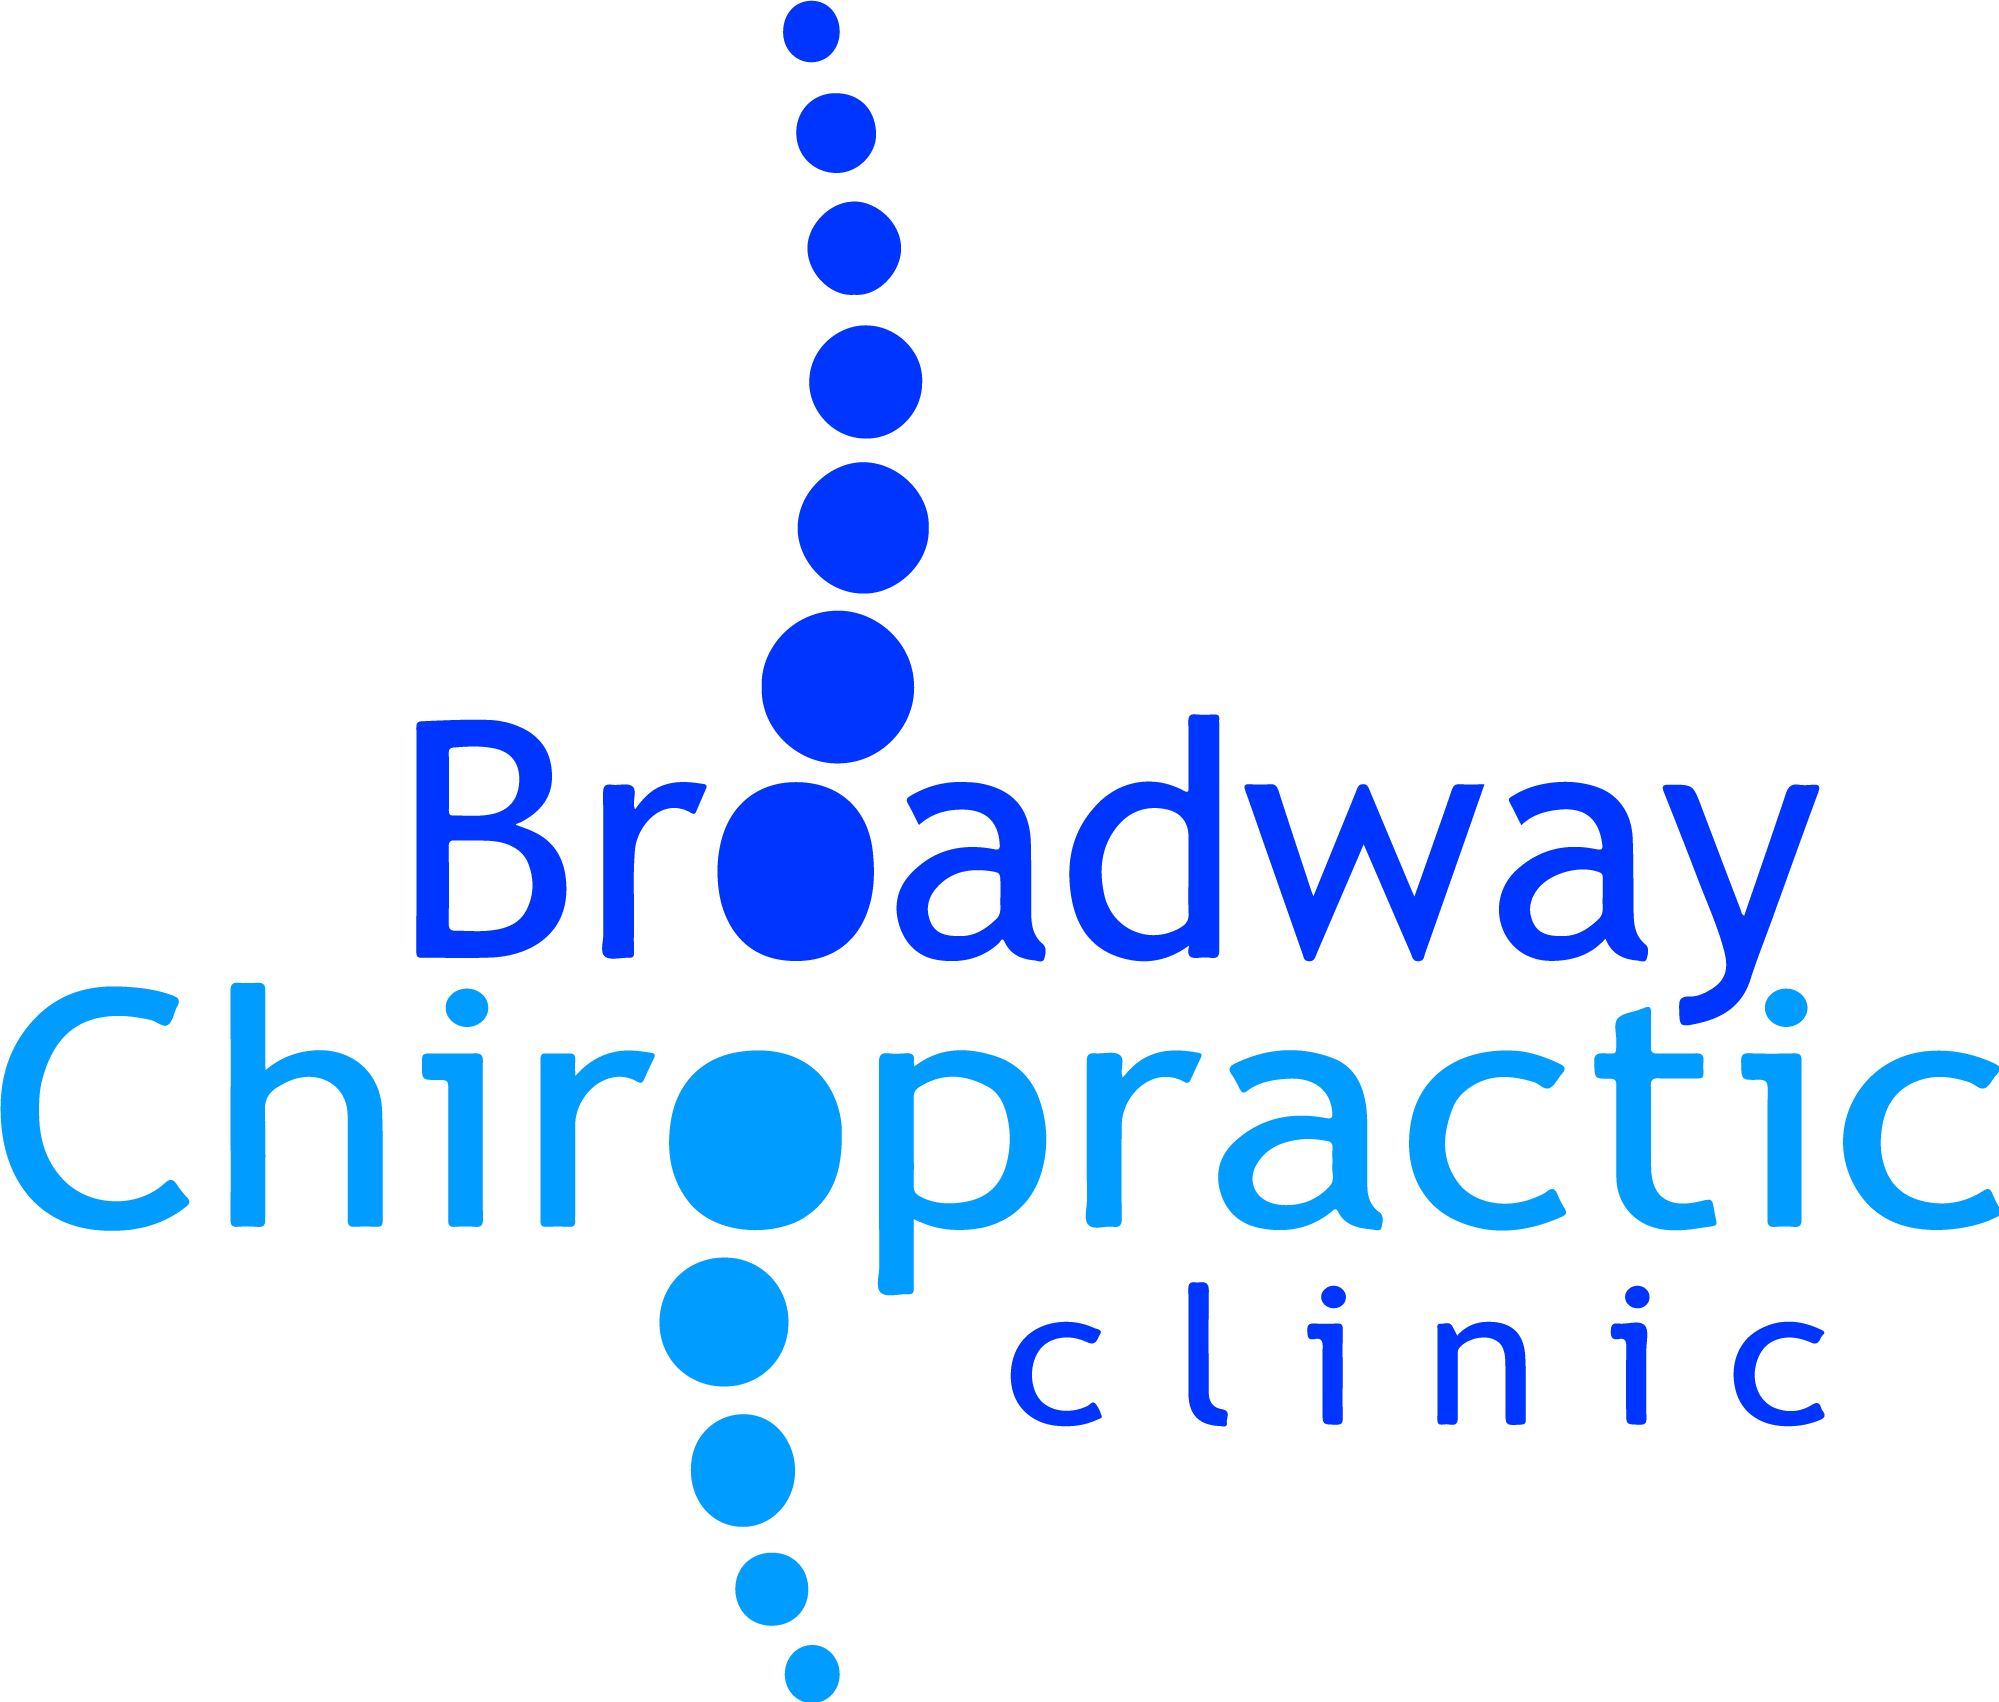 Broadway Chiropractic Clinic